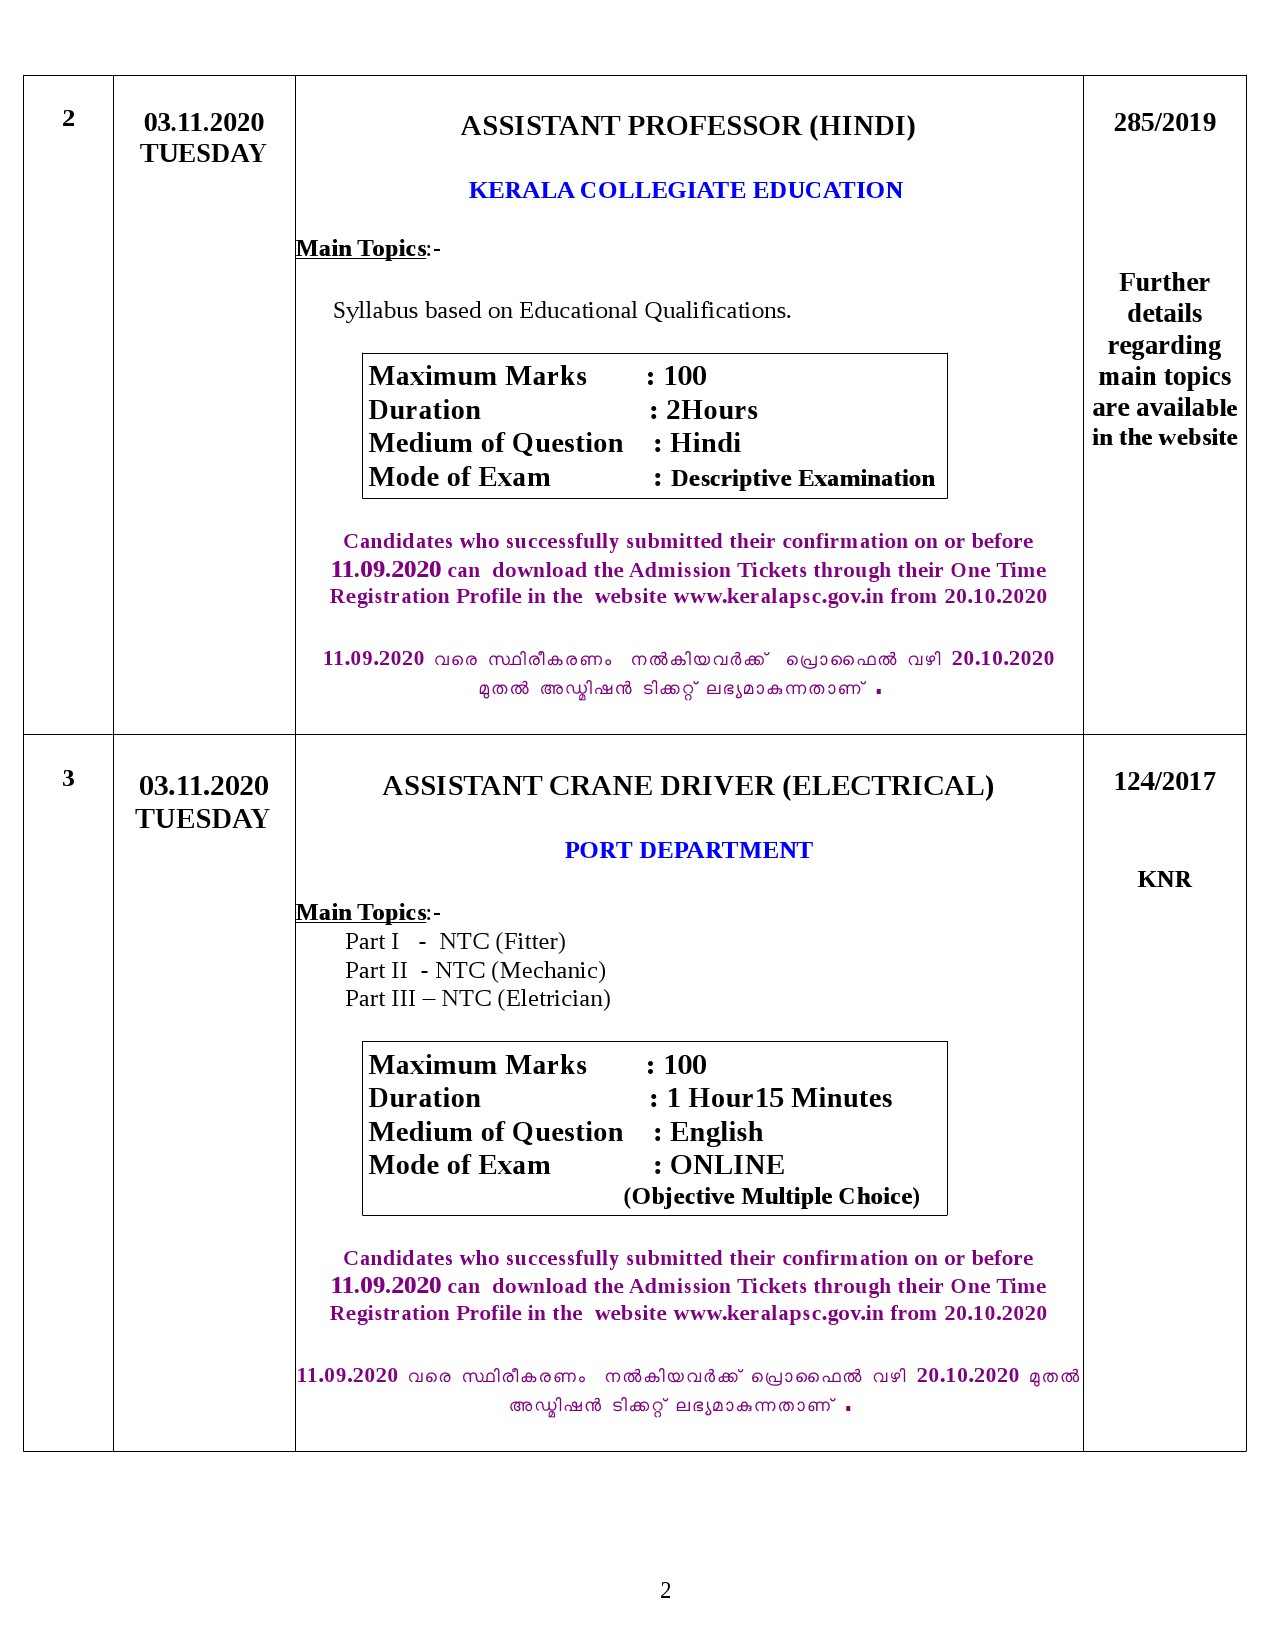 Kerala PSC Final Exam Schedule for November 2020 - Notification Image 2